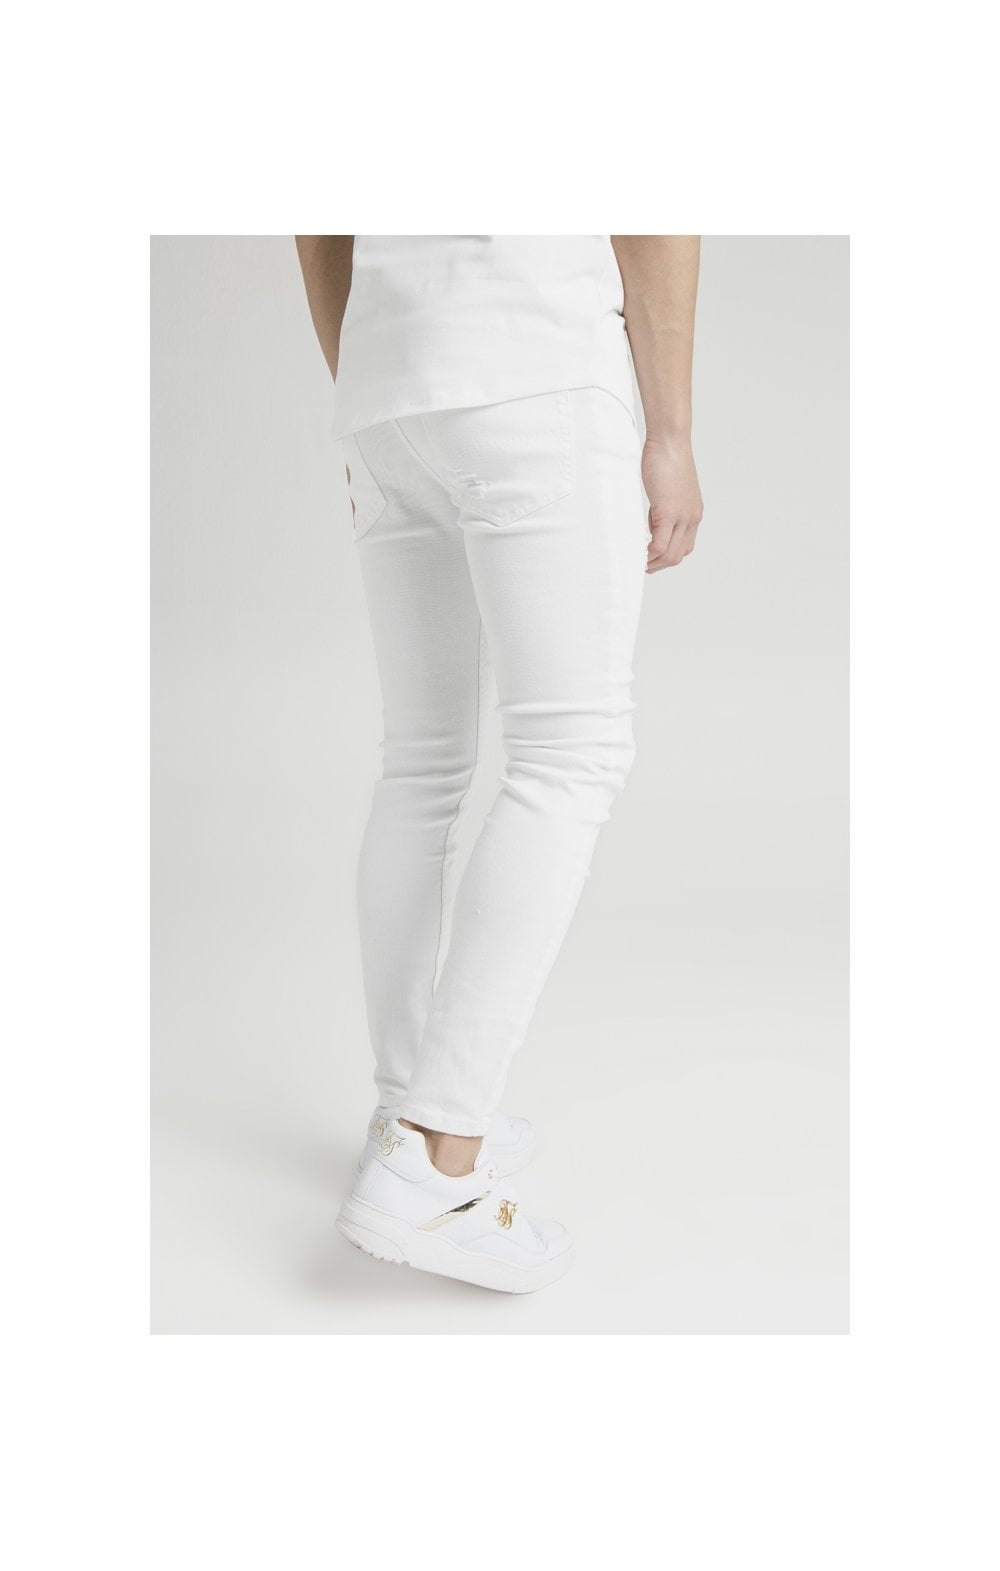 Illusive London Distressed Skinny Jeans - White (2)